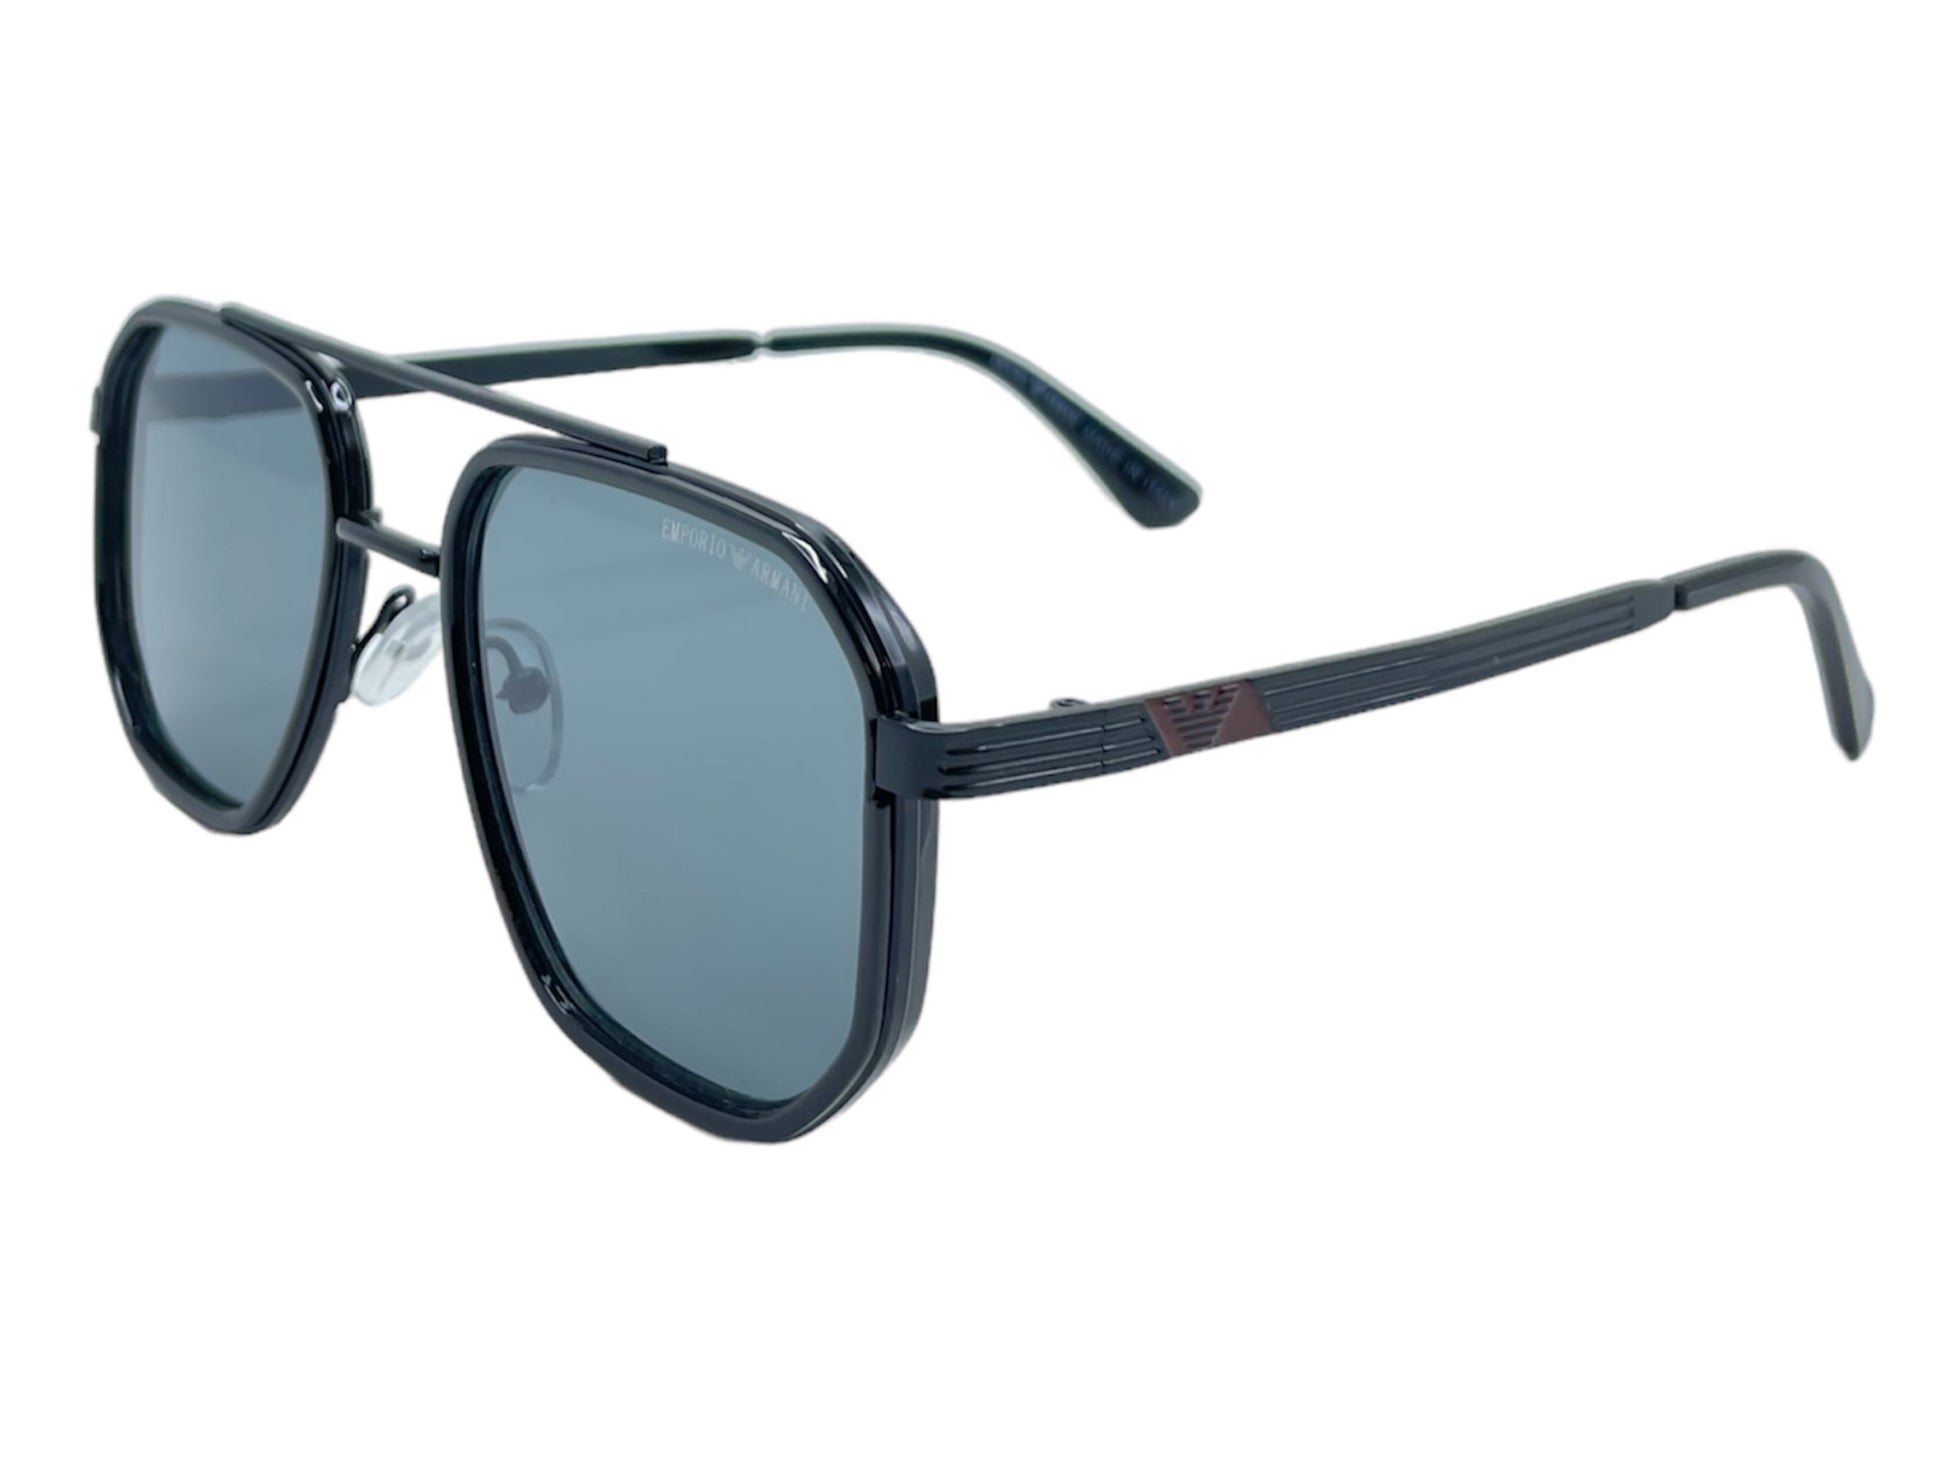 NS Deluxe - 247 - Black - Sunglasses